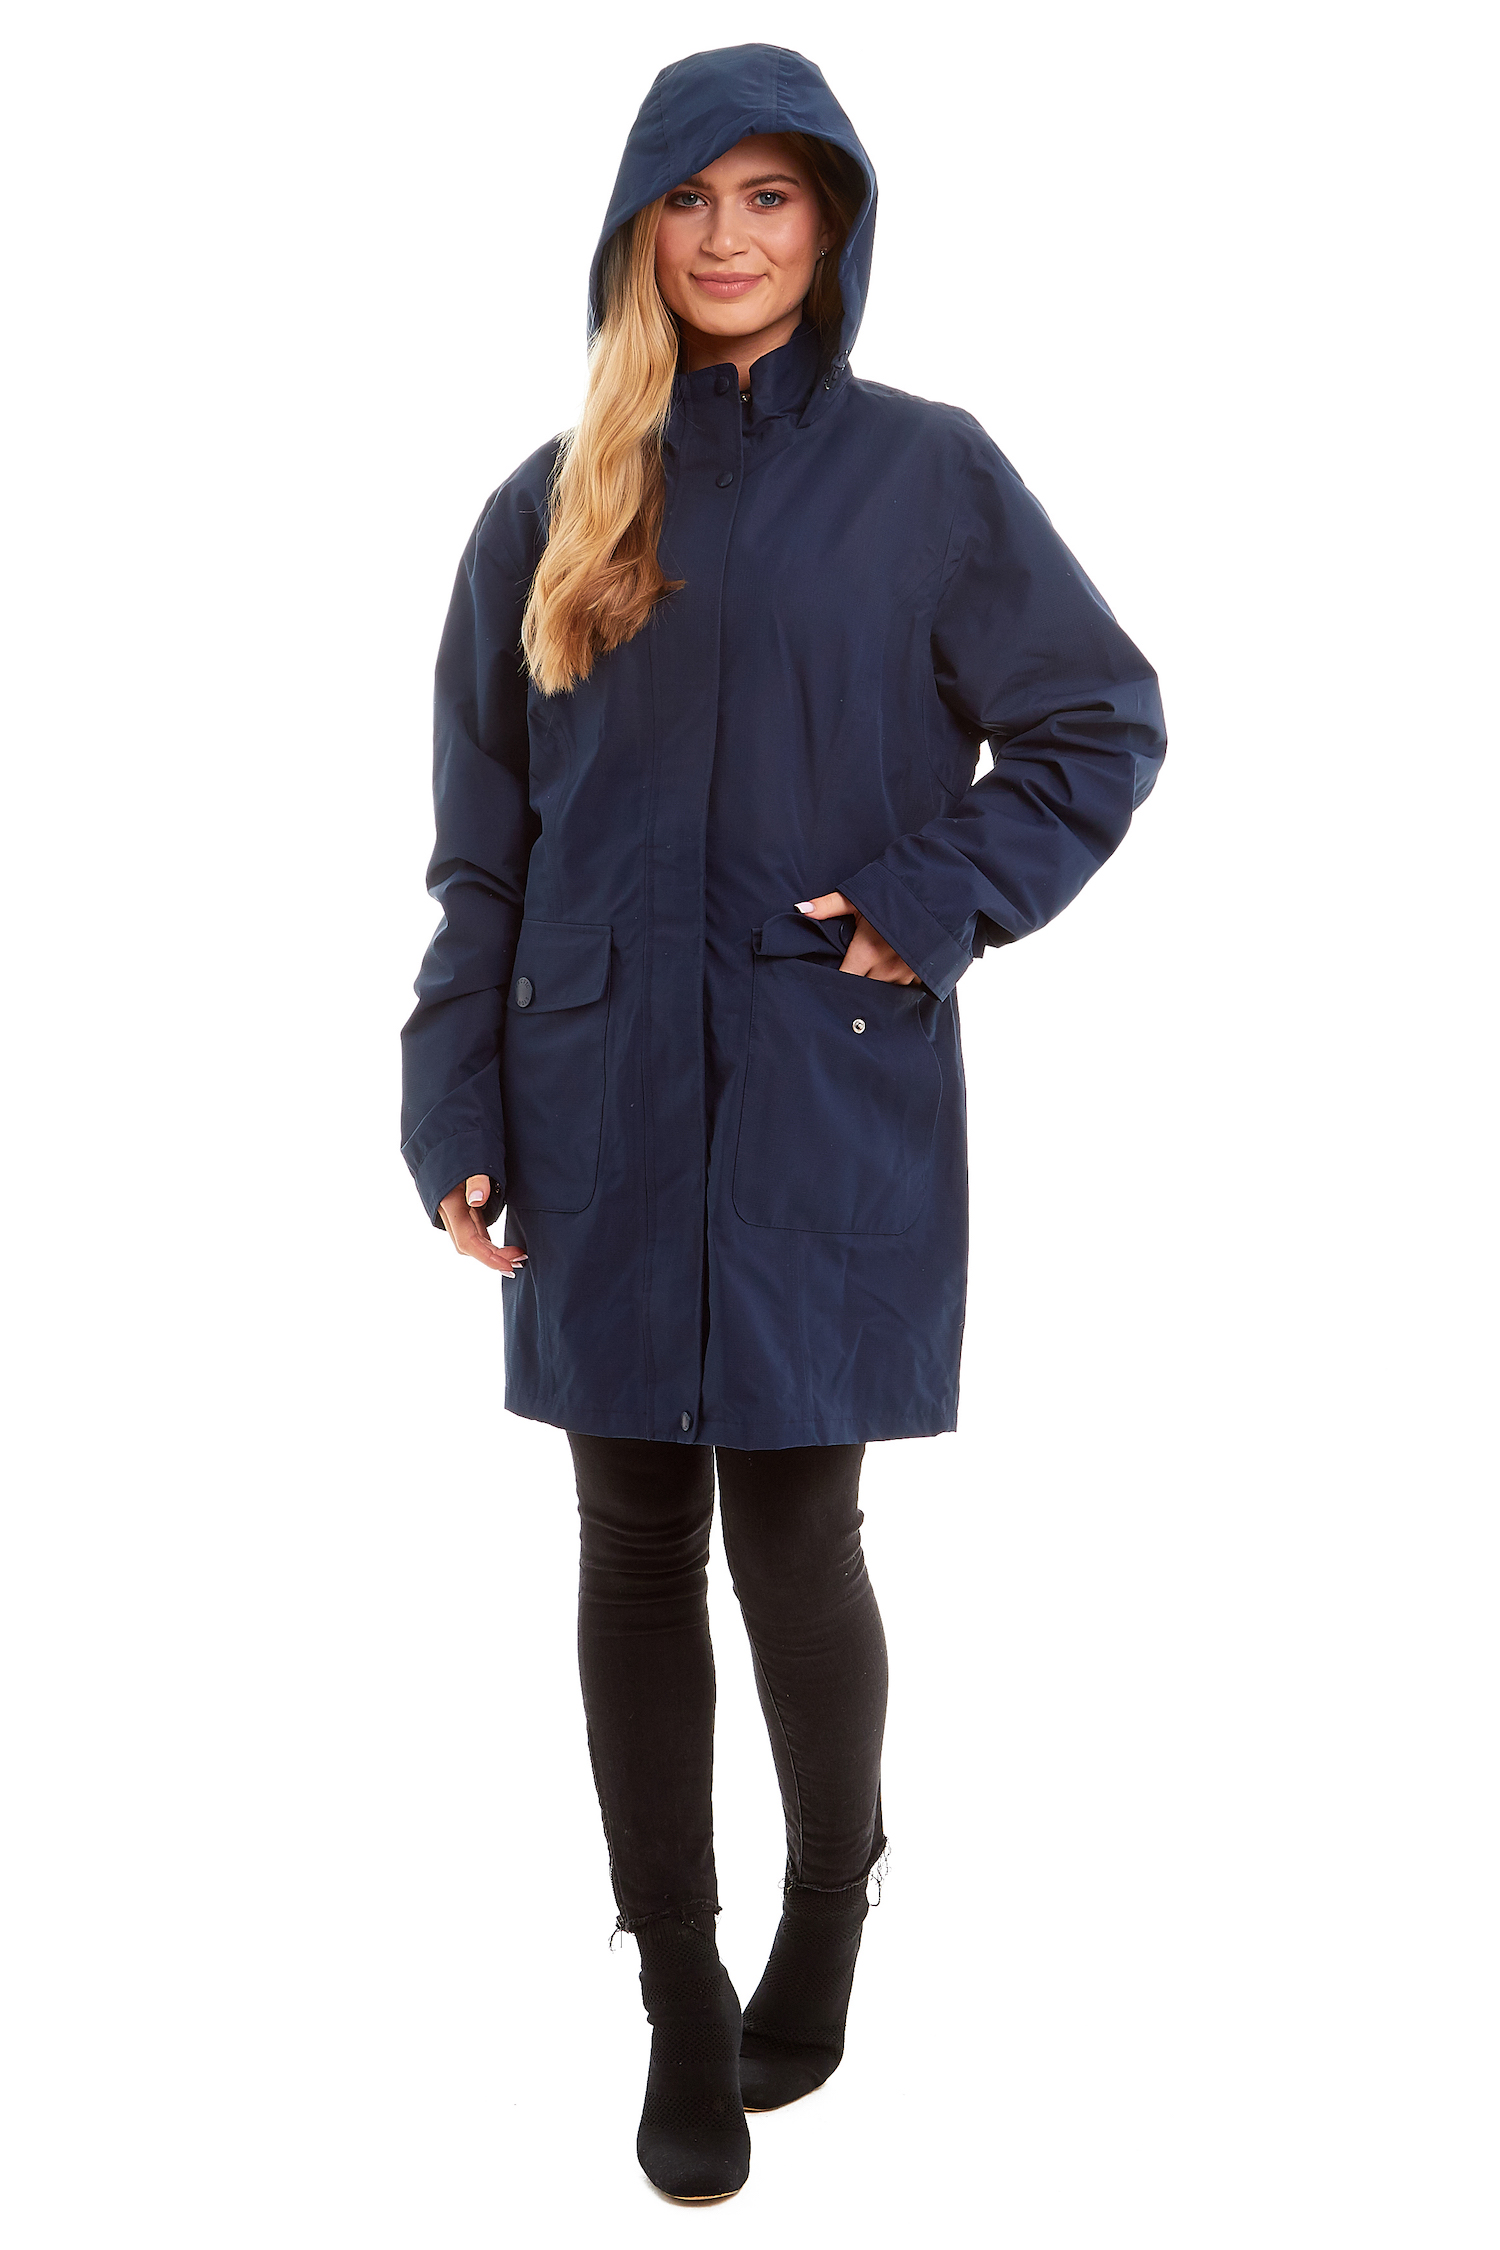 Arctic Storm Women's Melanie Jacket - Navy - Edinburgh Outdoor Wear